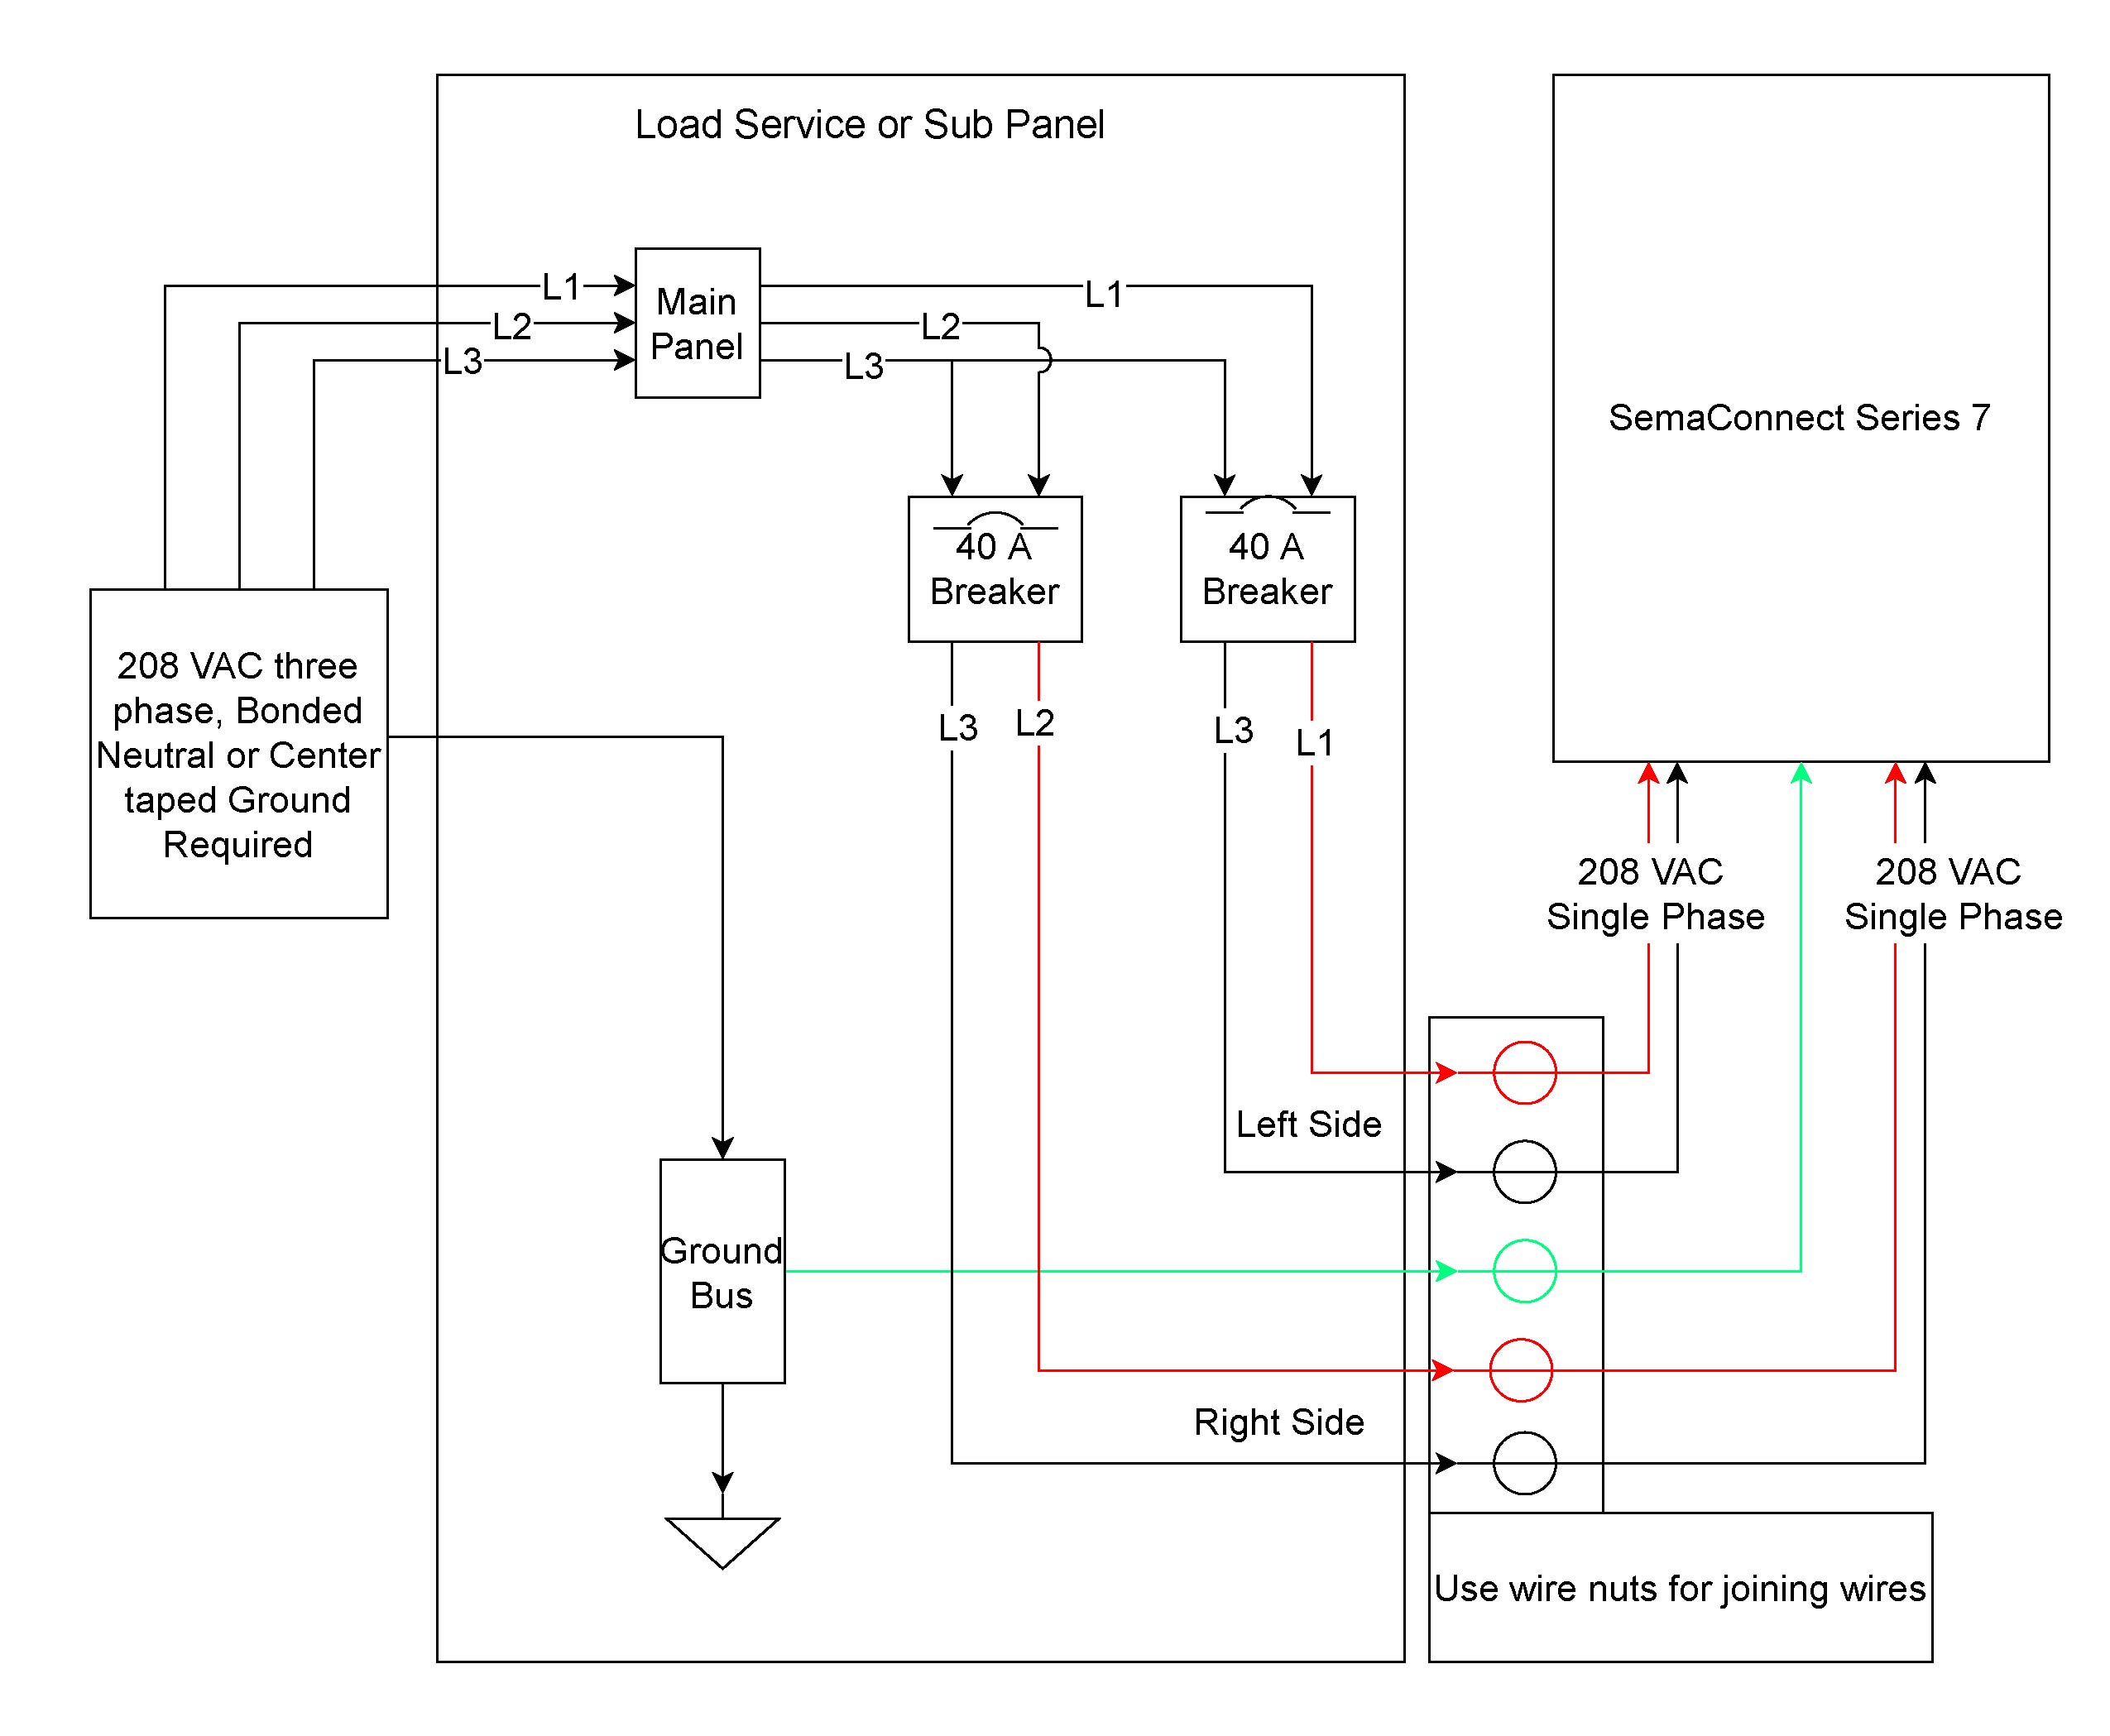 weg 12 lead motor wiring diagram